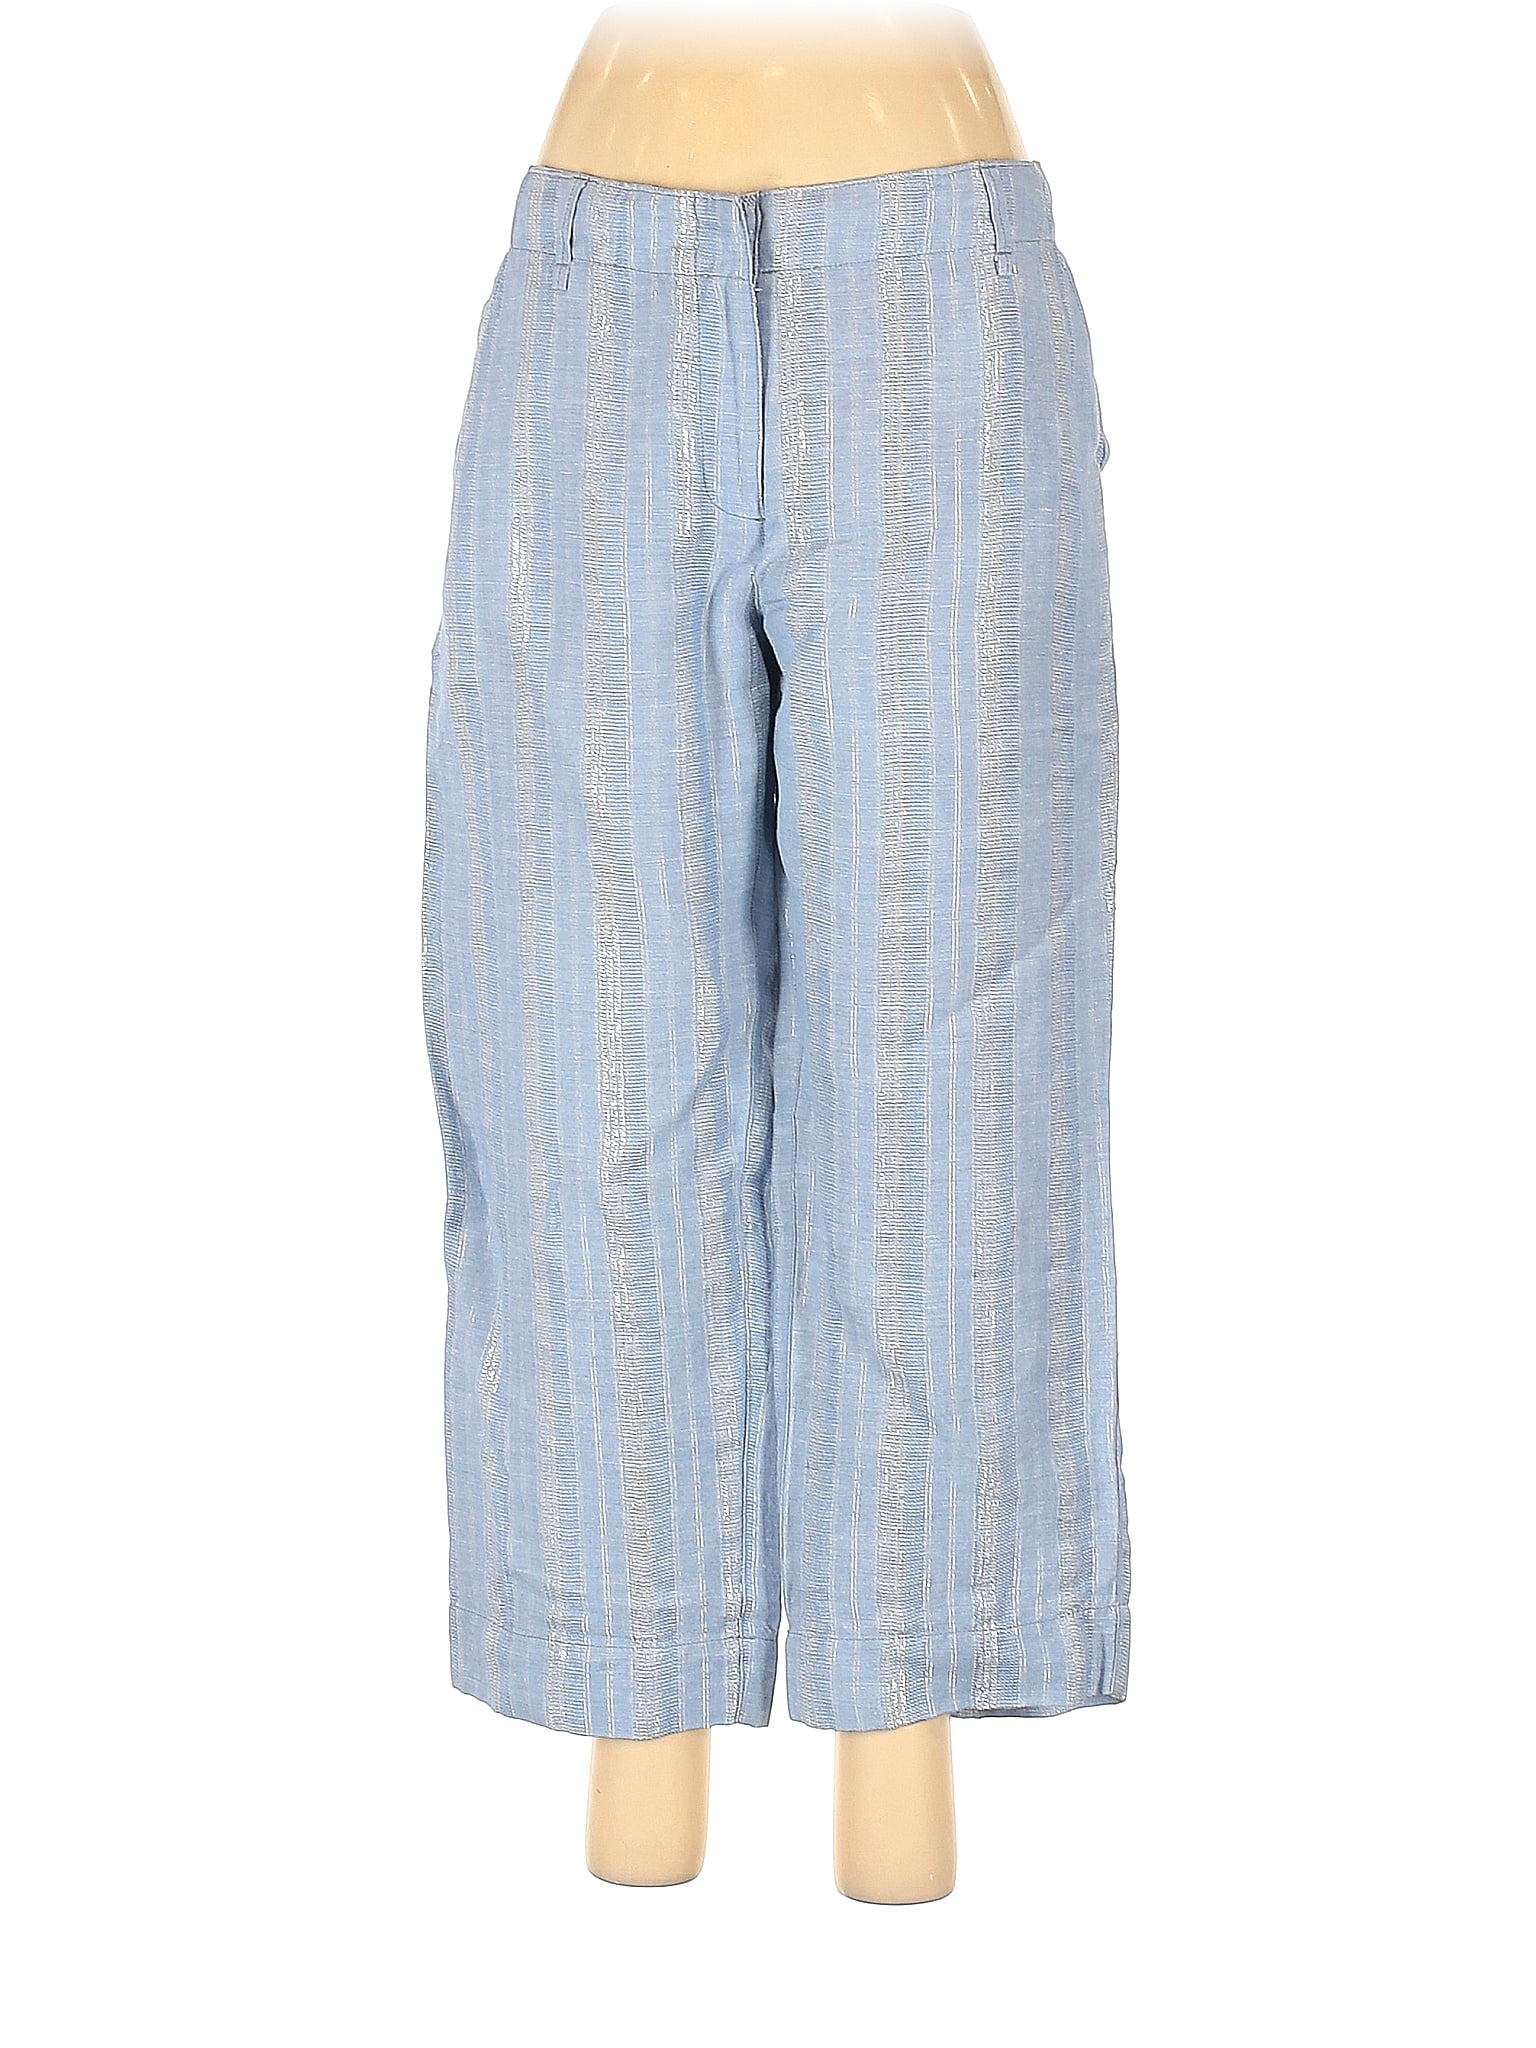 Tommy Bahama Blue Linen Pants Size 6 - 71% off | thredUP